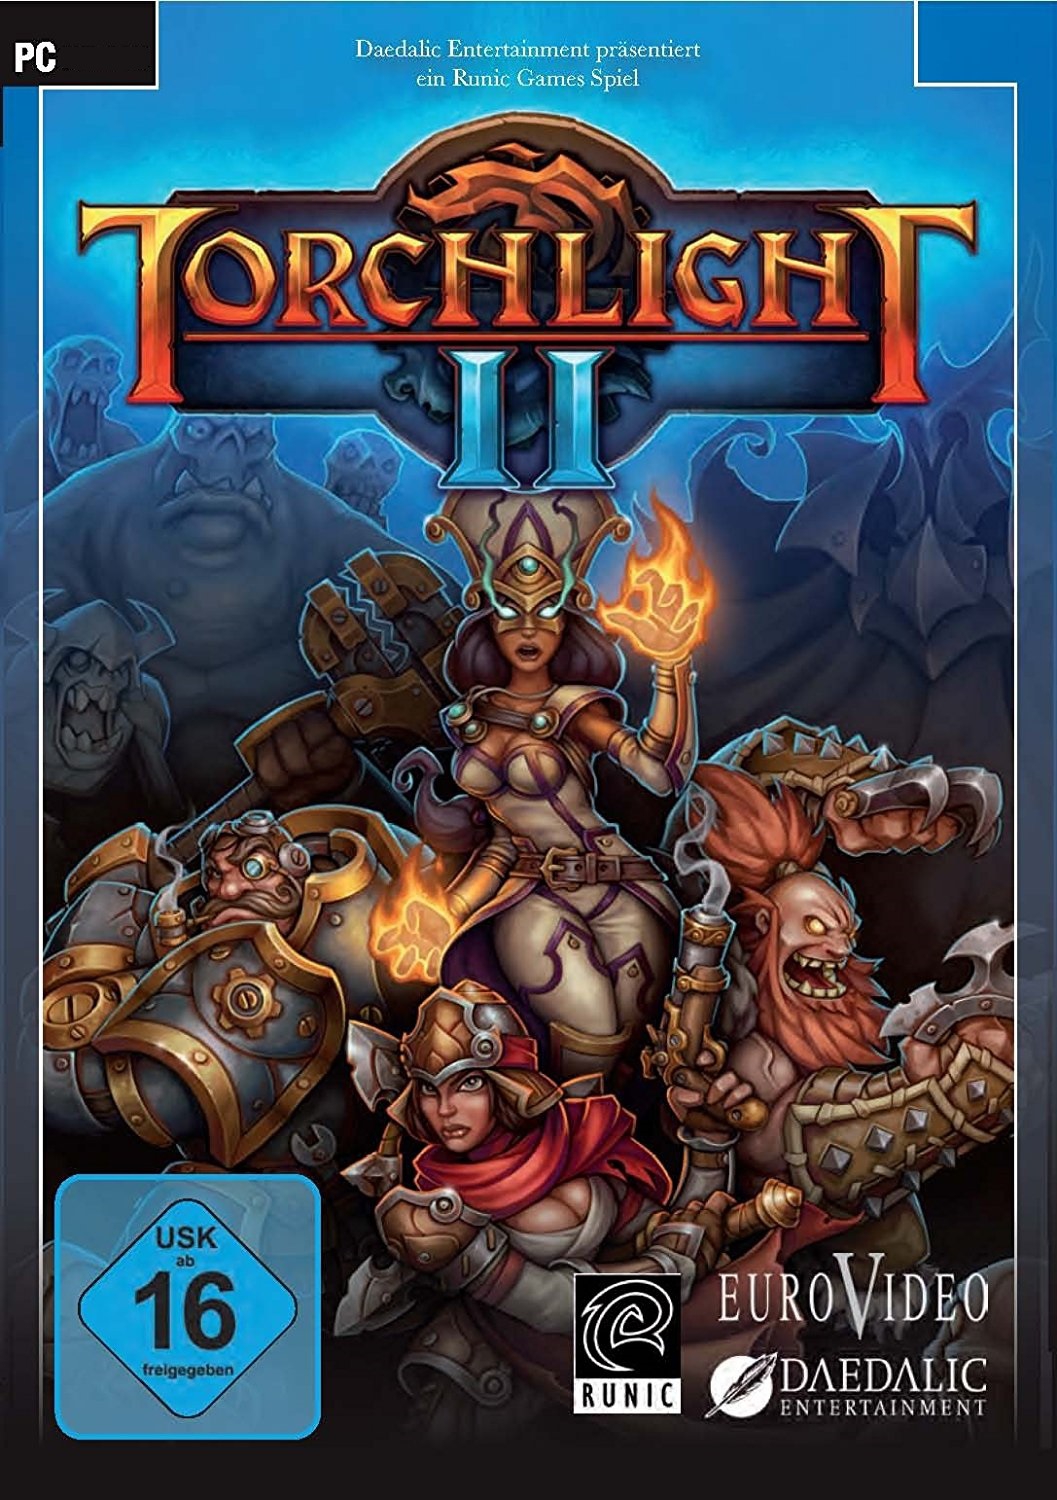 torchlight 2 steam key download free